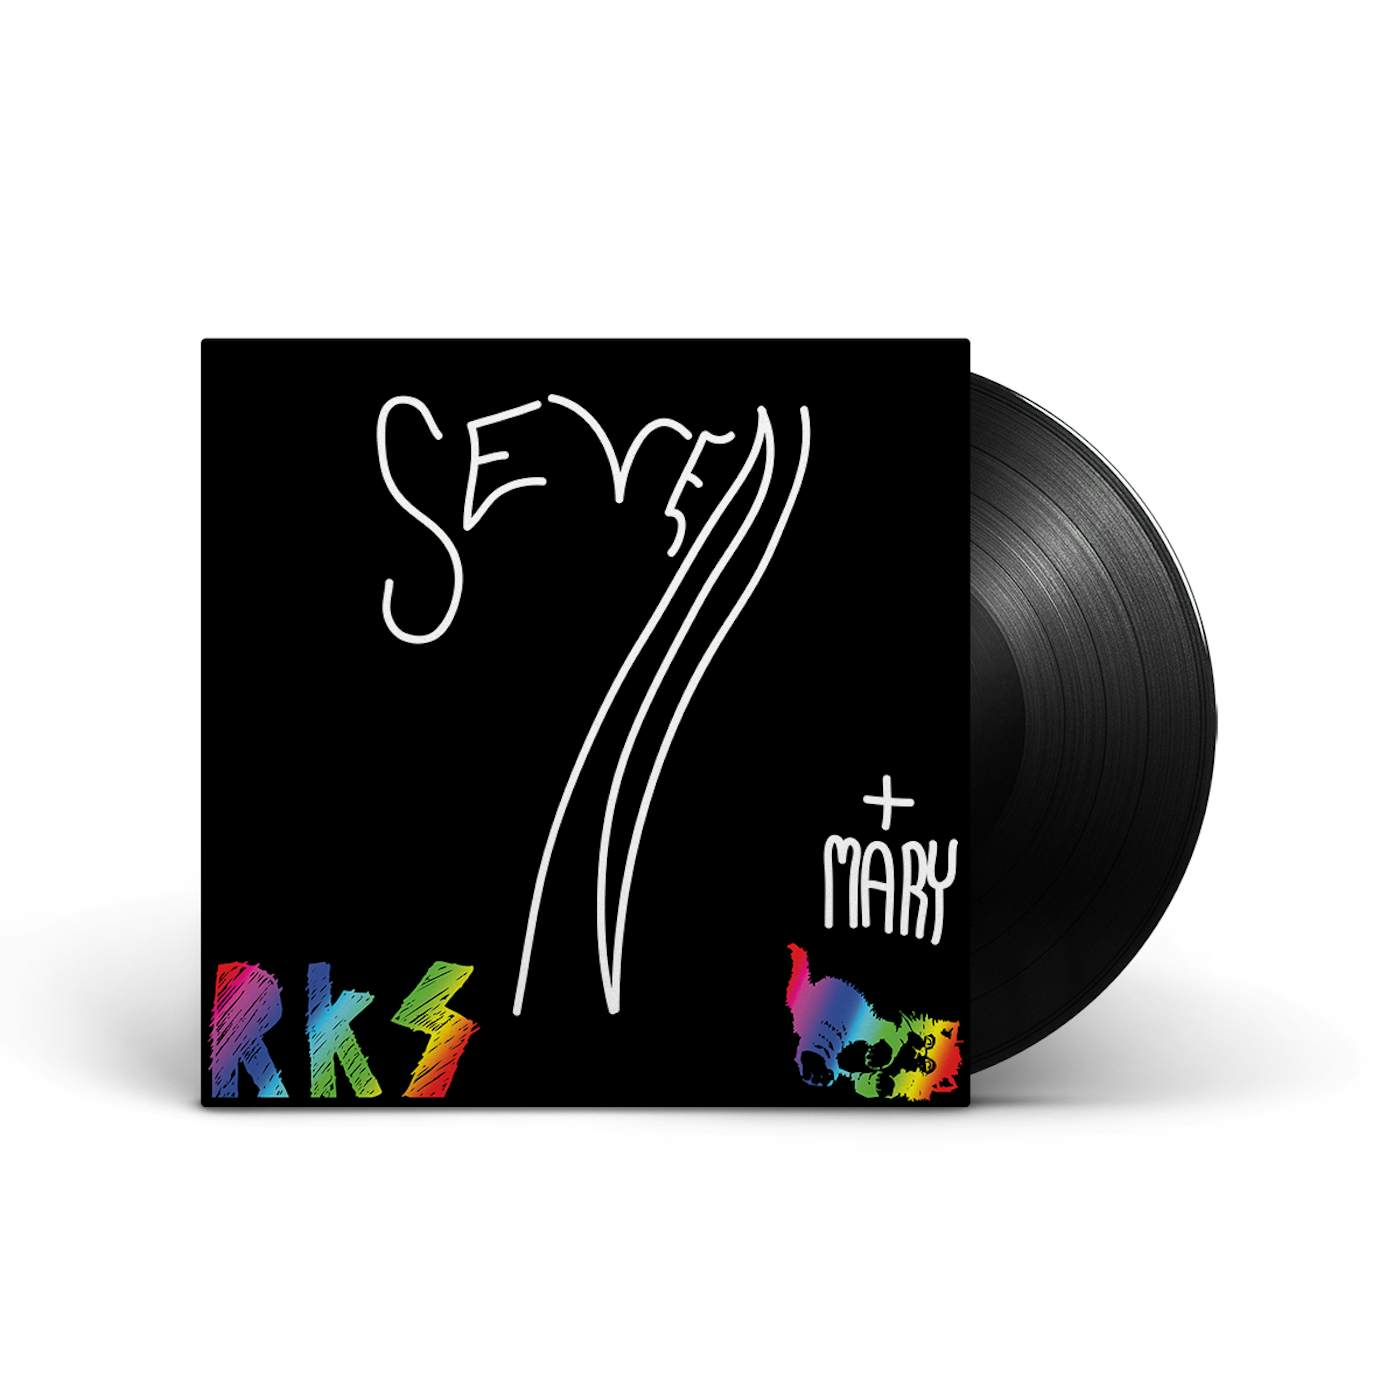 Rainbow Kitten Surprise How To: Friend Love Freefall Vinyl Record